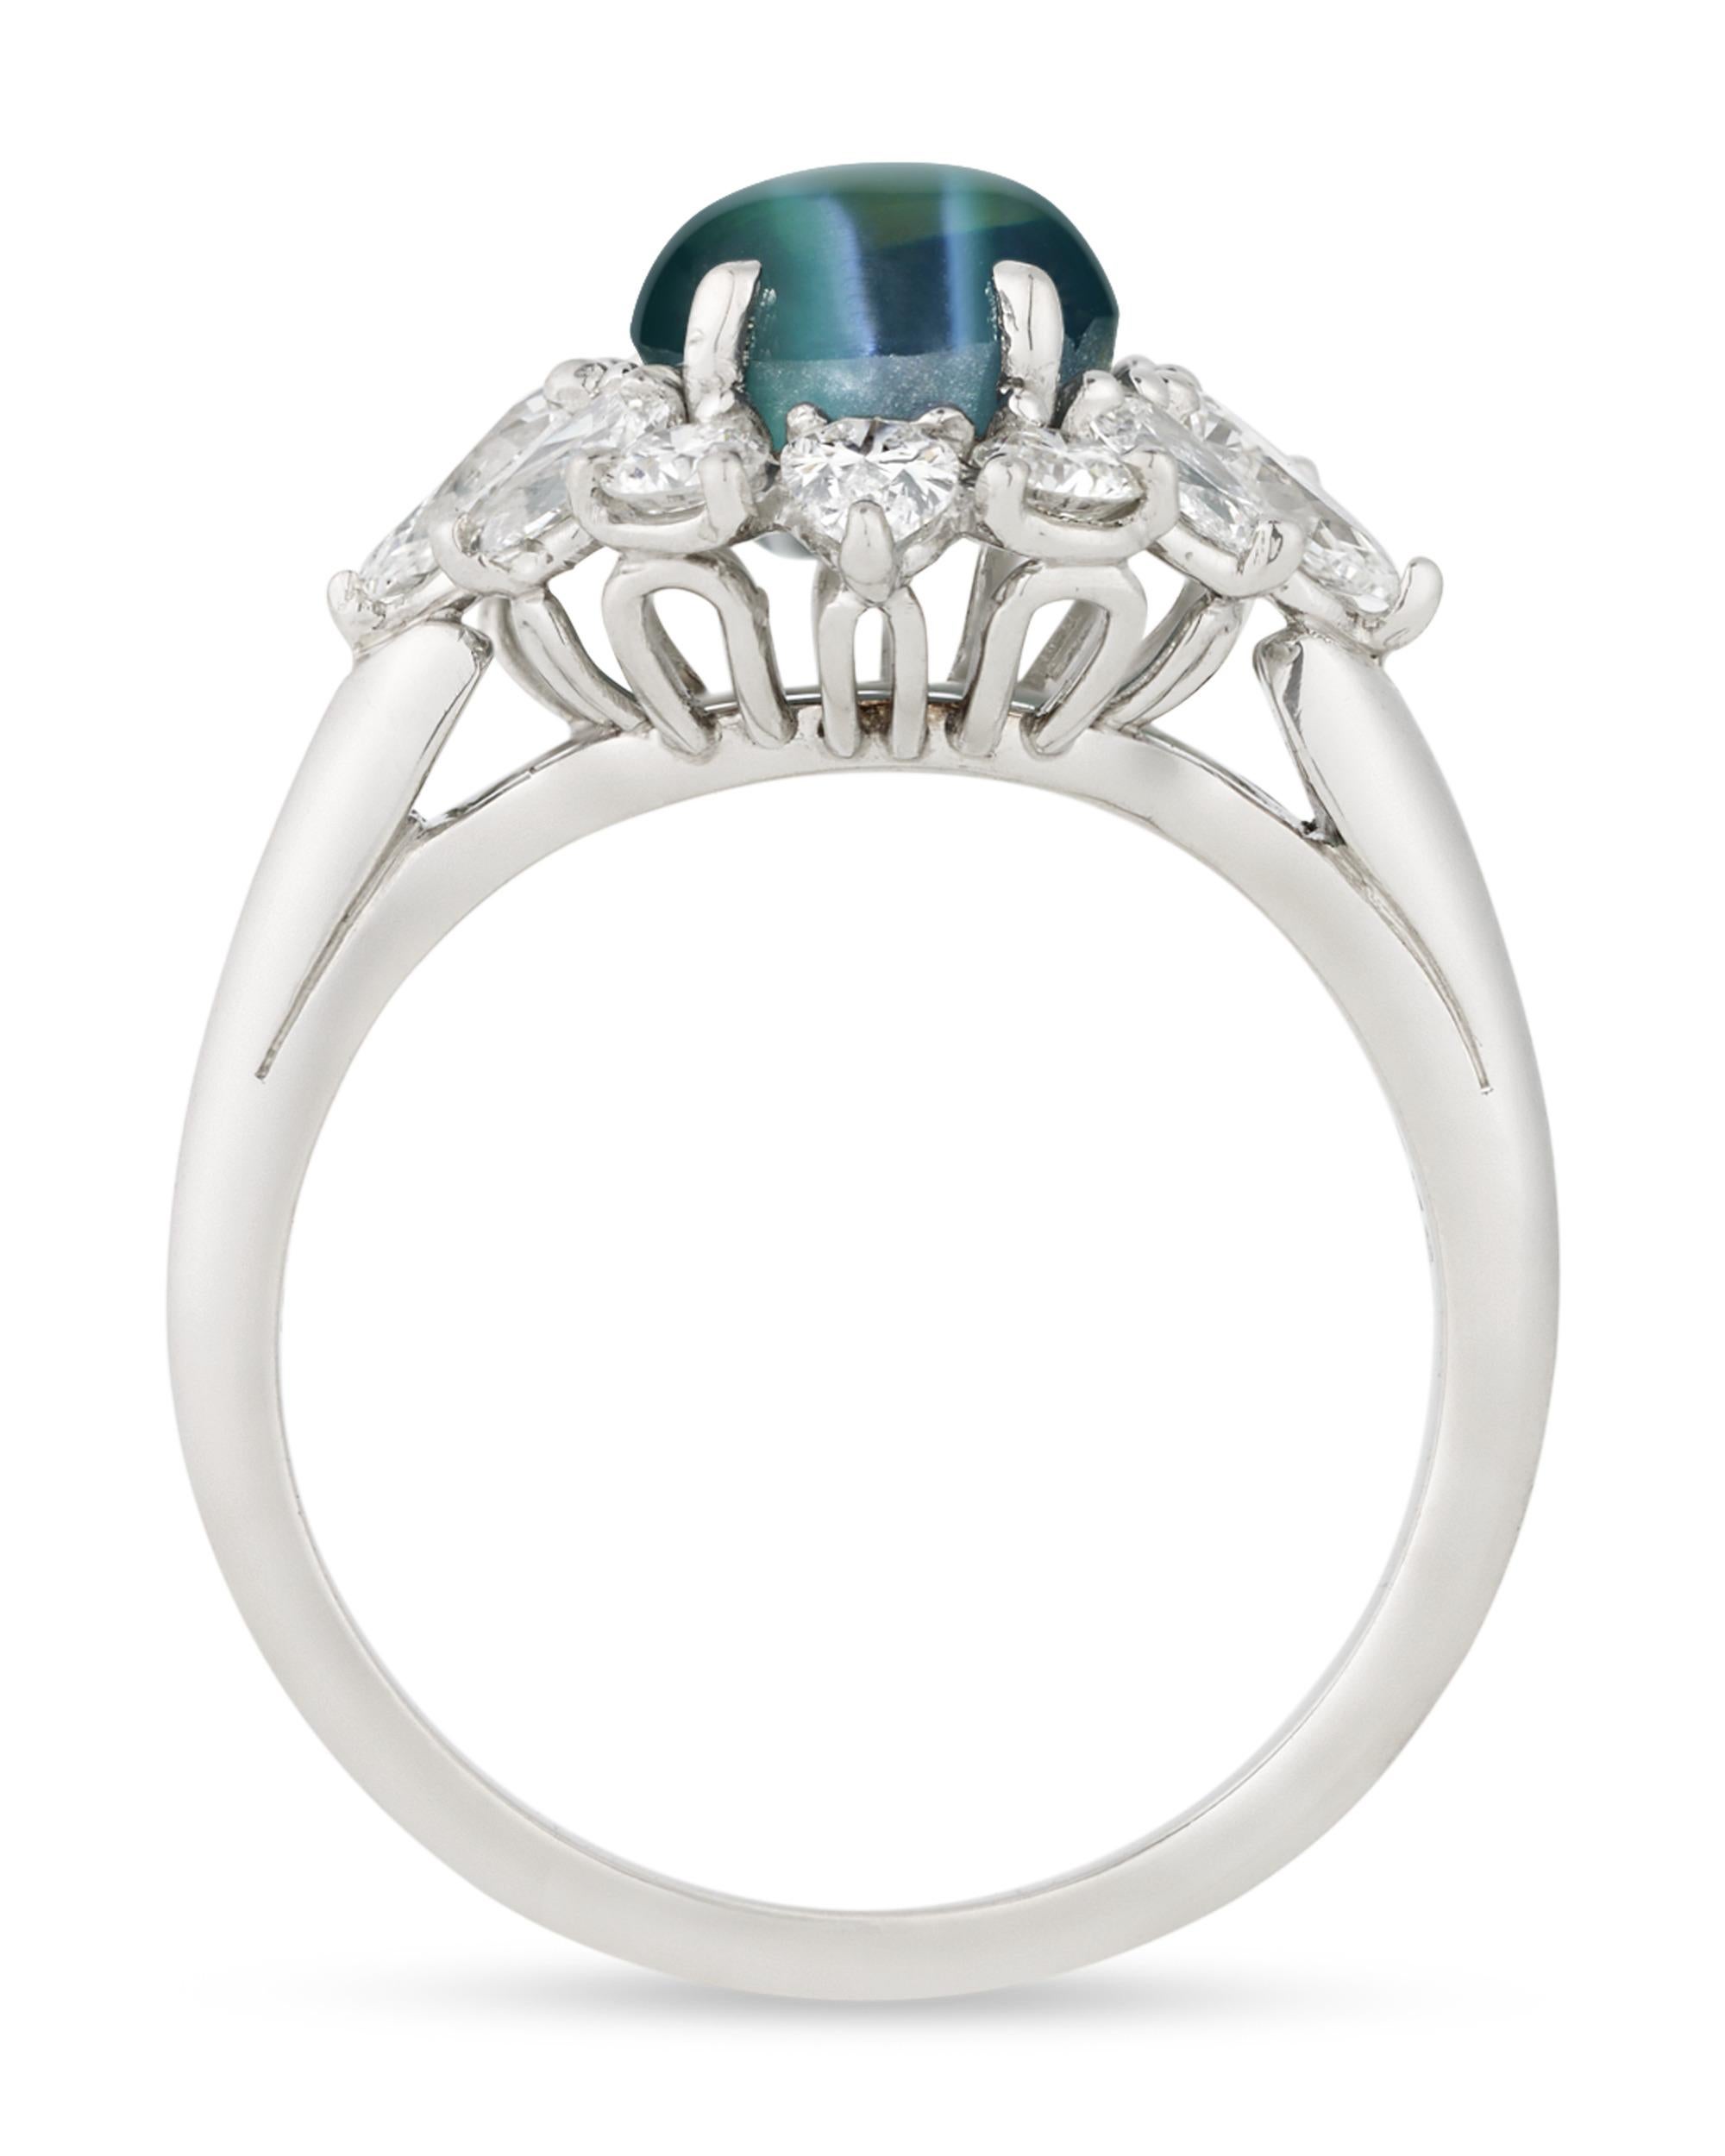 Modern Oscar Heyman Cat's Eye Alexandrite Ring, 3.65 Carats For Sale